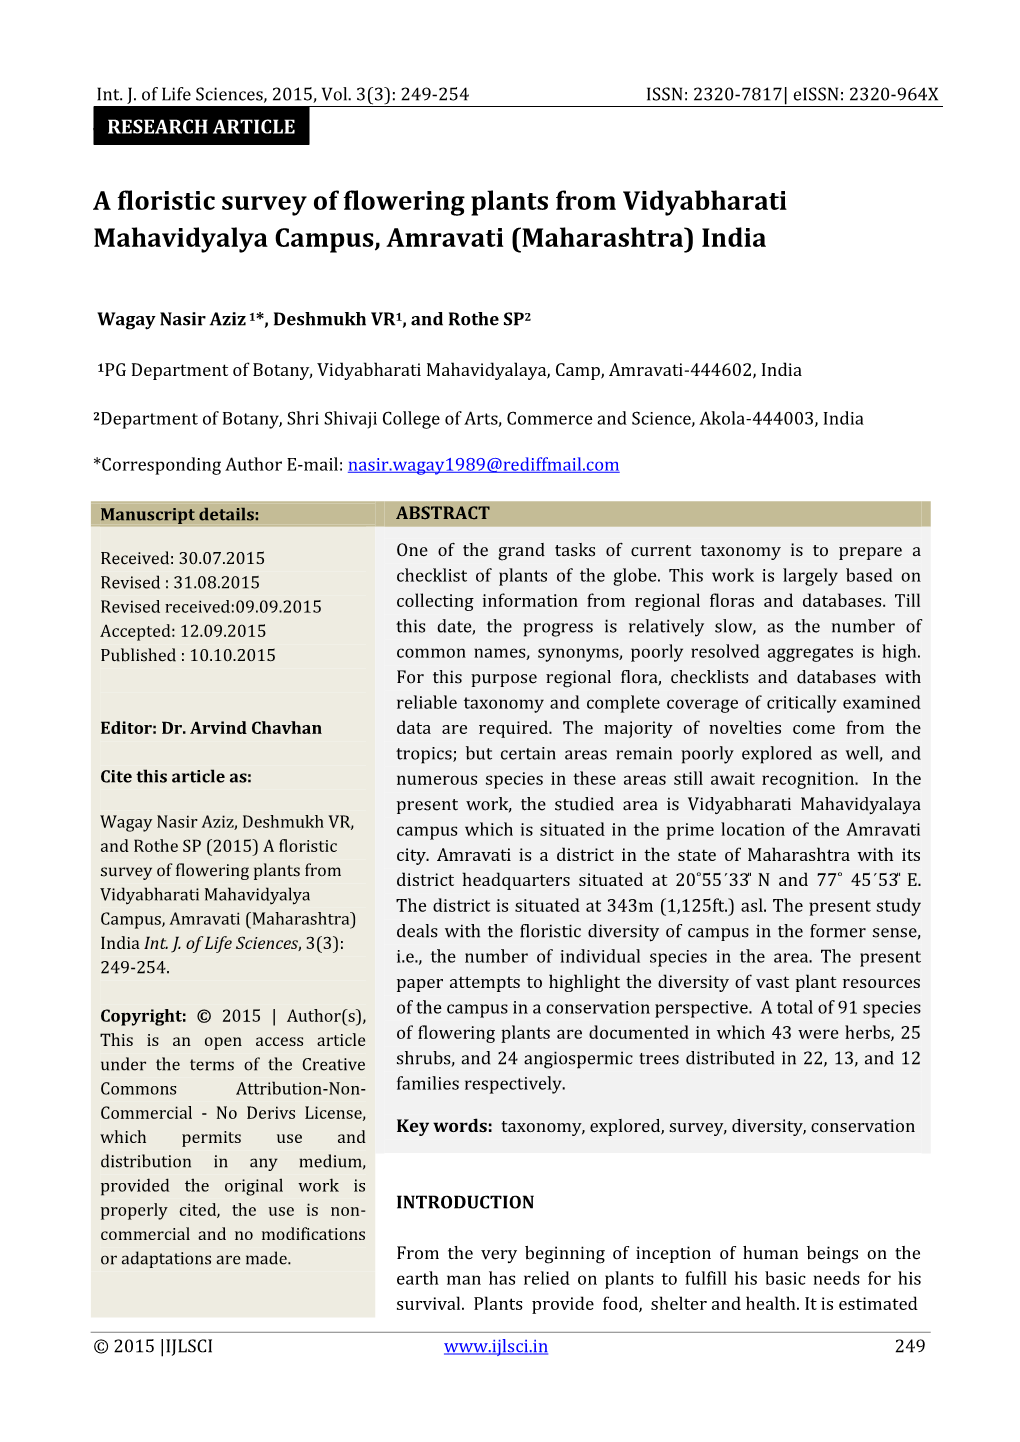 A Floristic Survey of Flowering Plants from Vidyabharati Mahavidyalya Campus, Amravati (Maharashtra) India